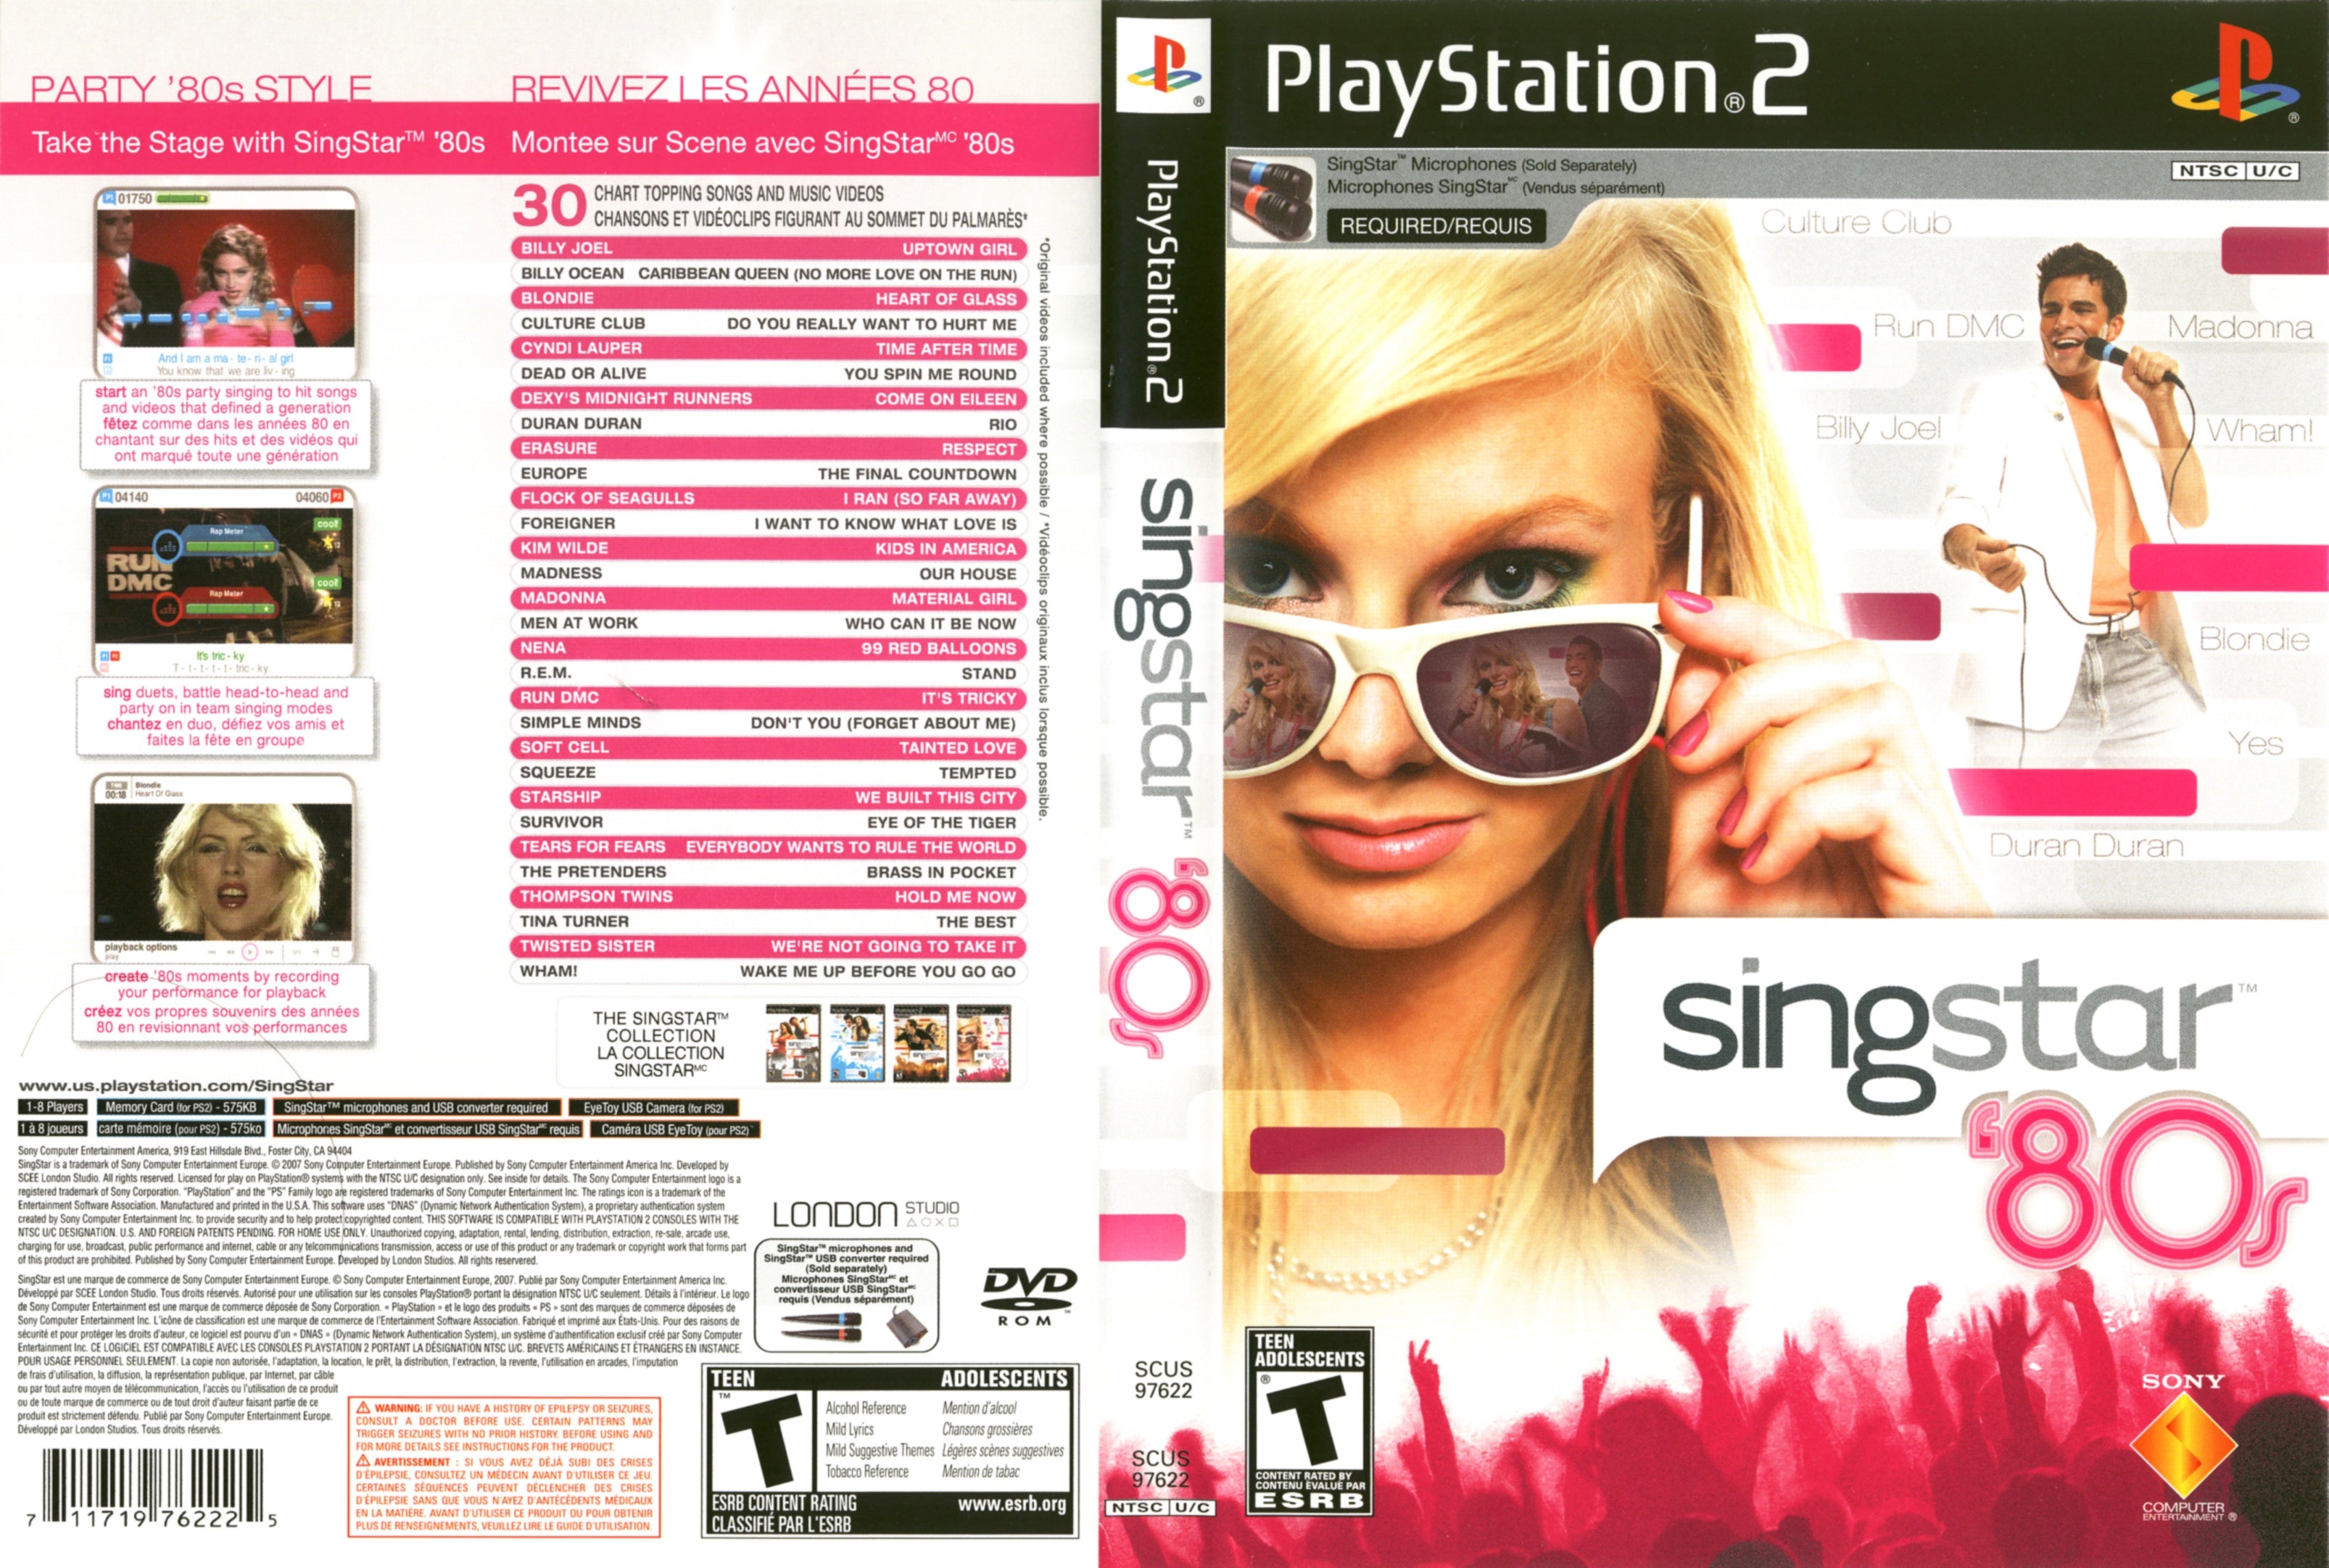 SingStar 80's Bundle (Includes 2 Microphones) - PlayStation 2